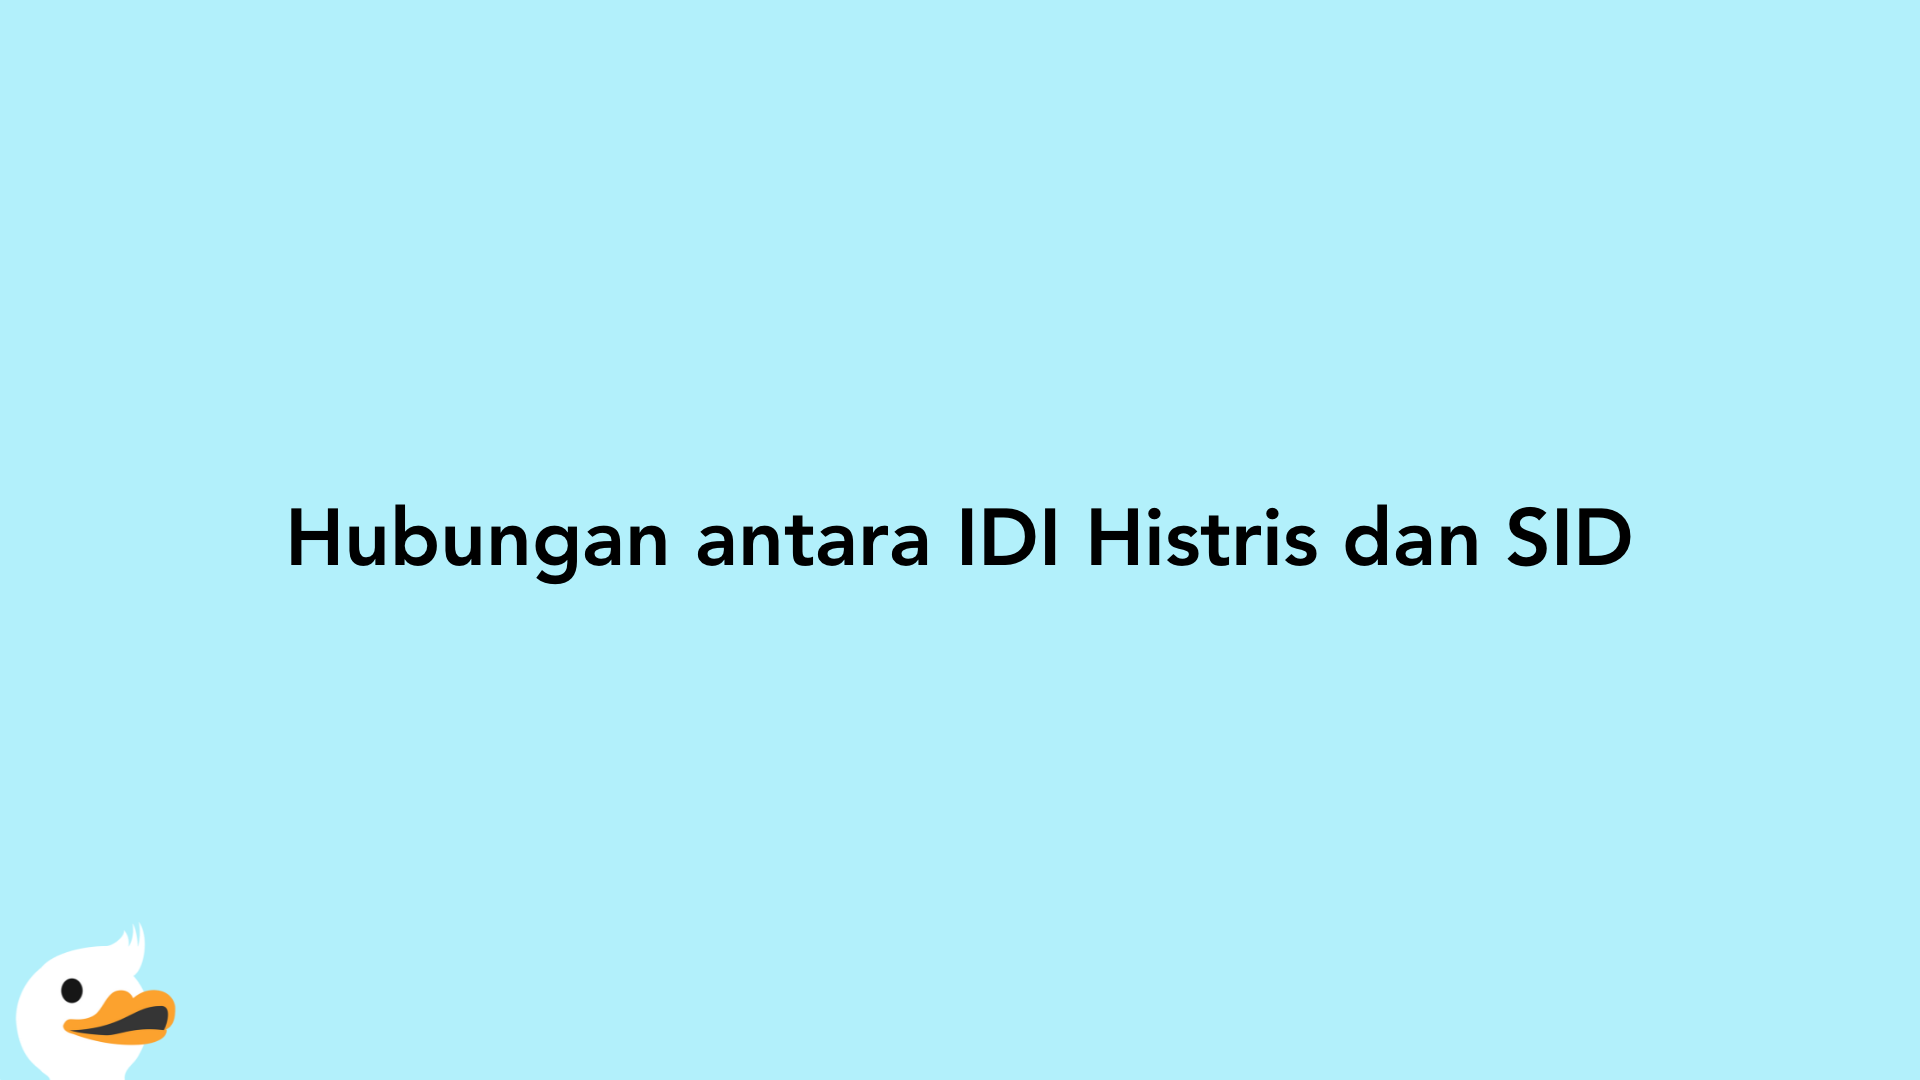 Hubungan antara IDI Histris dan SID